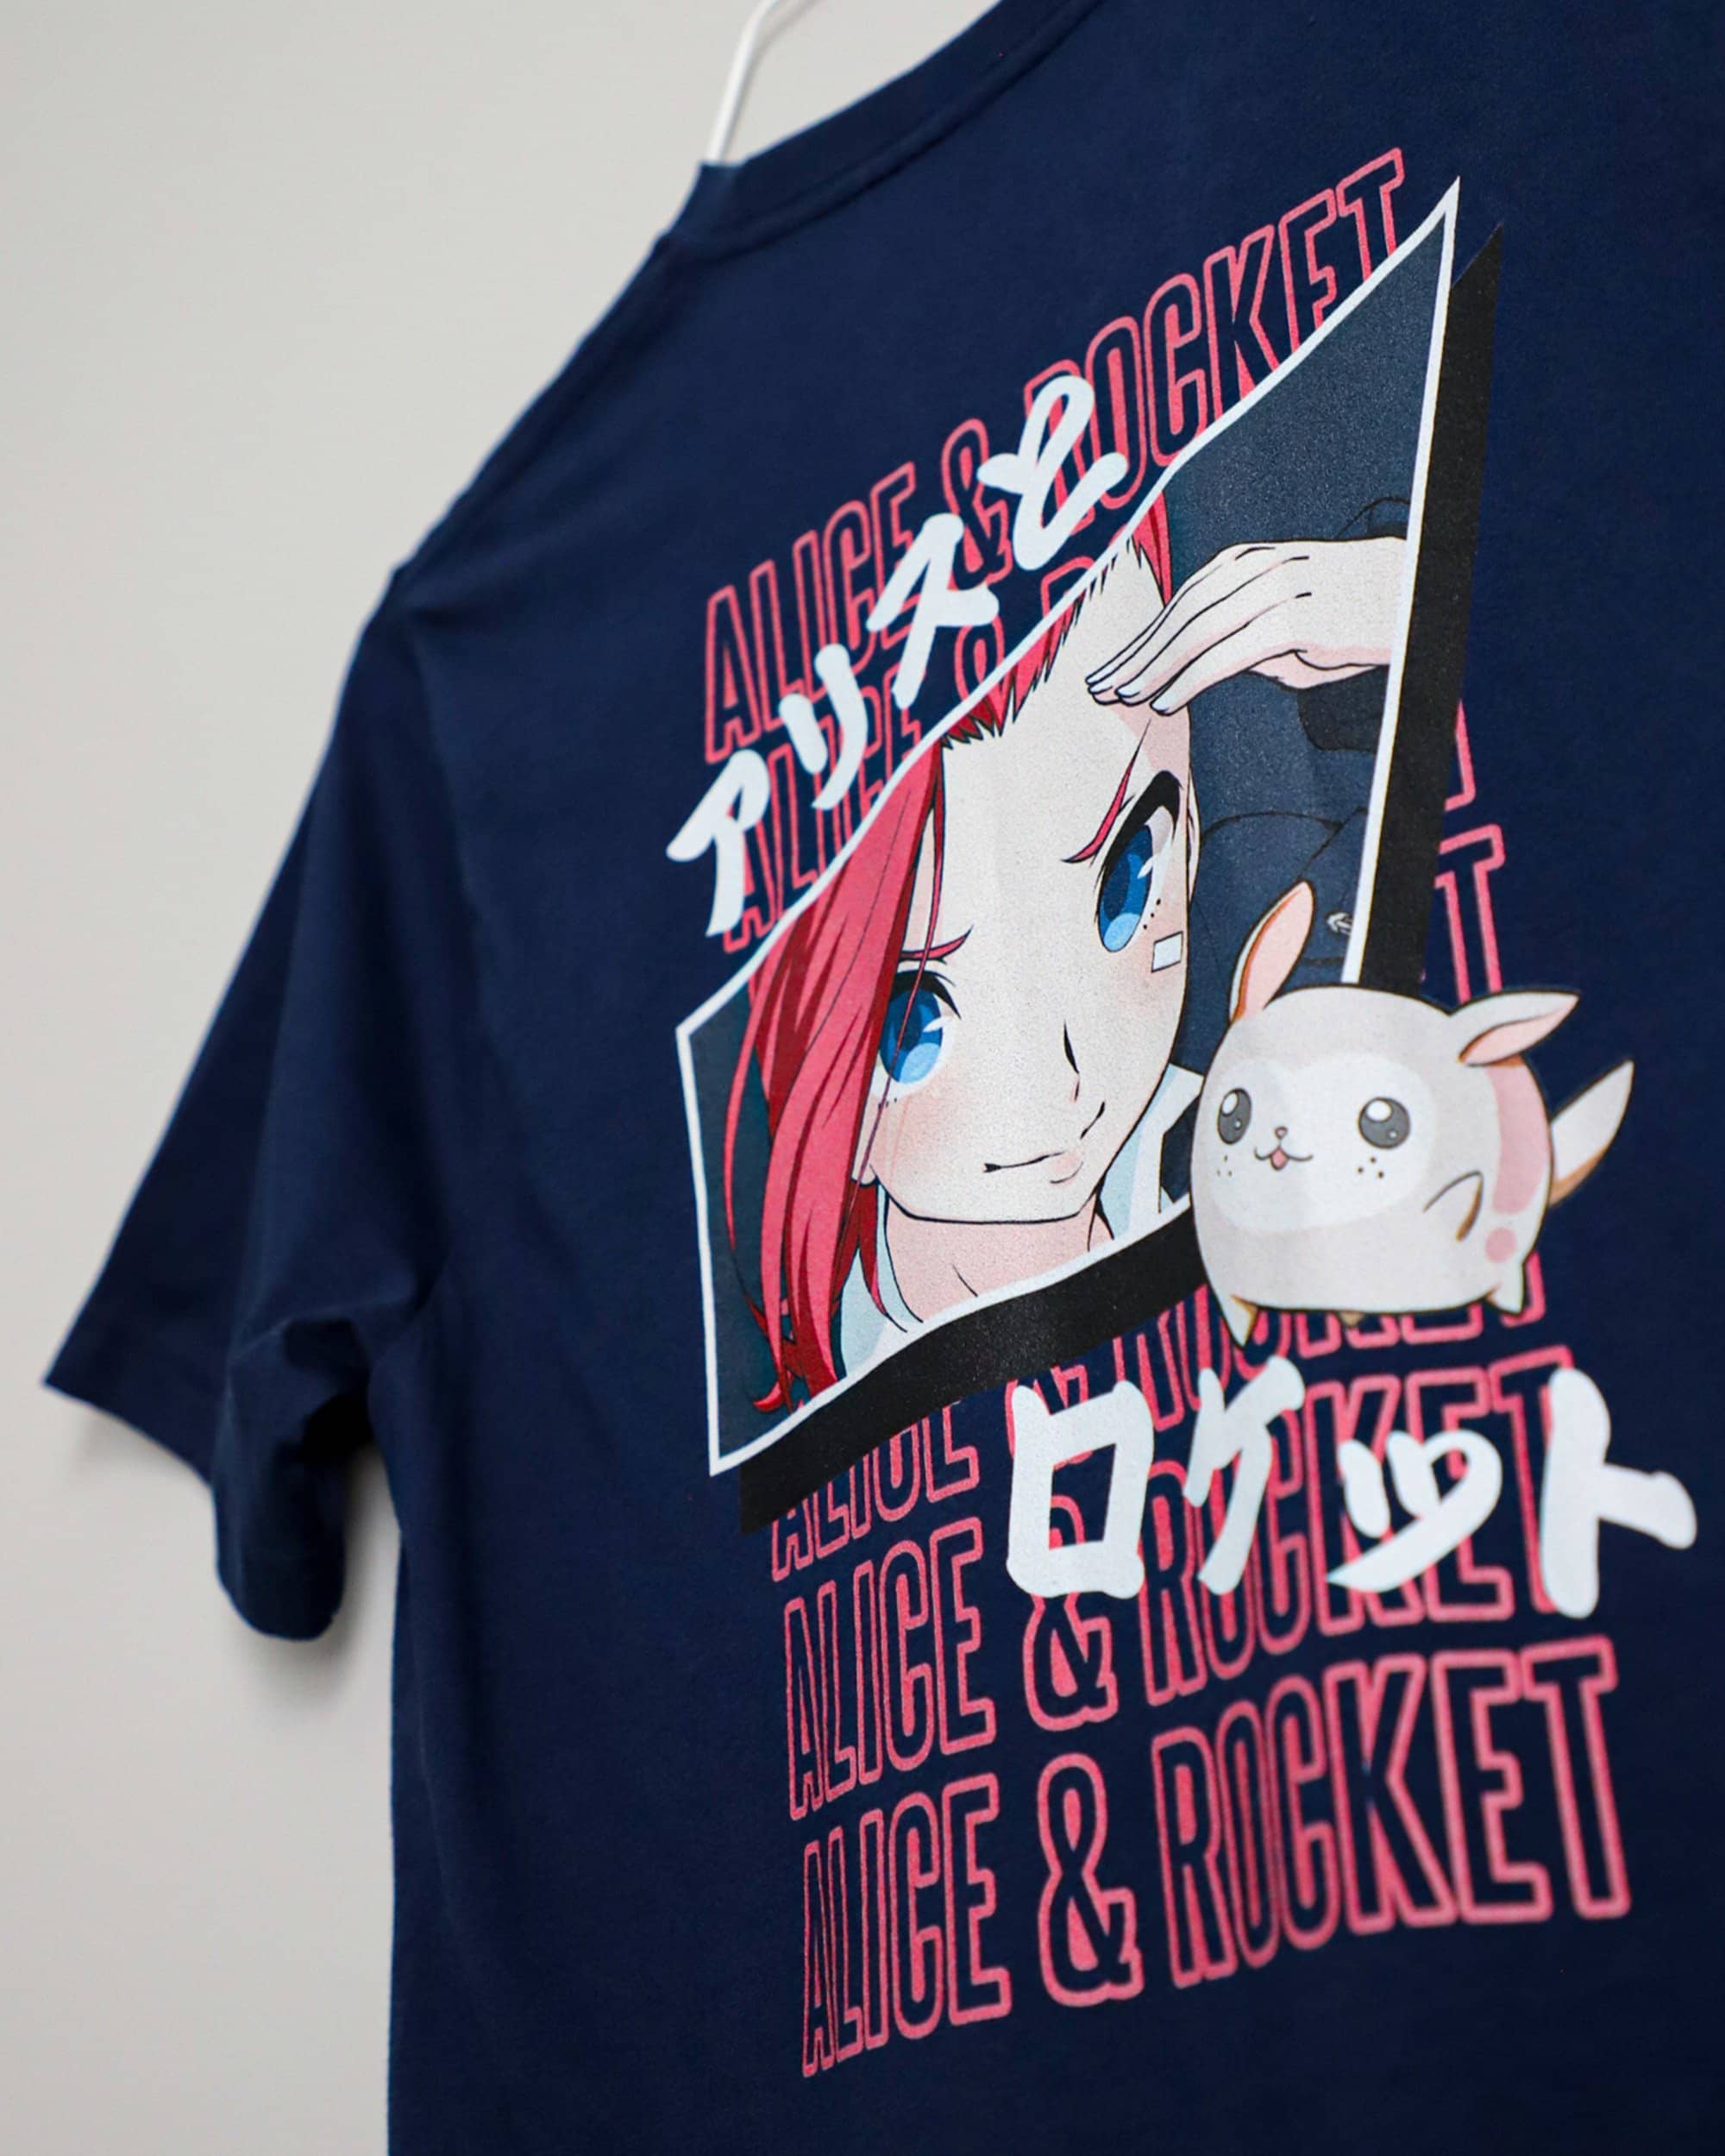 Imouri X Anime NYC - Alice & Rocket T Shirt